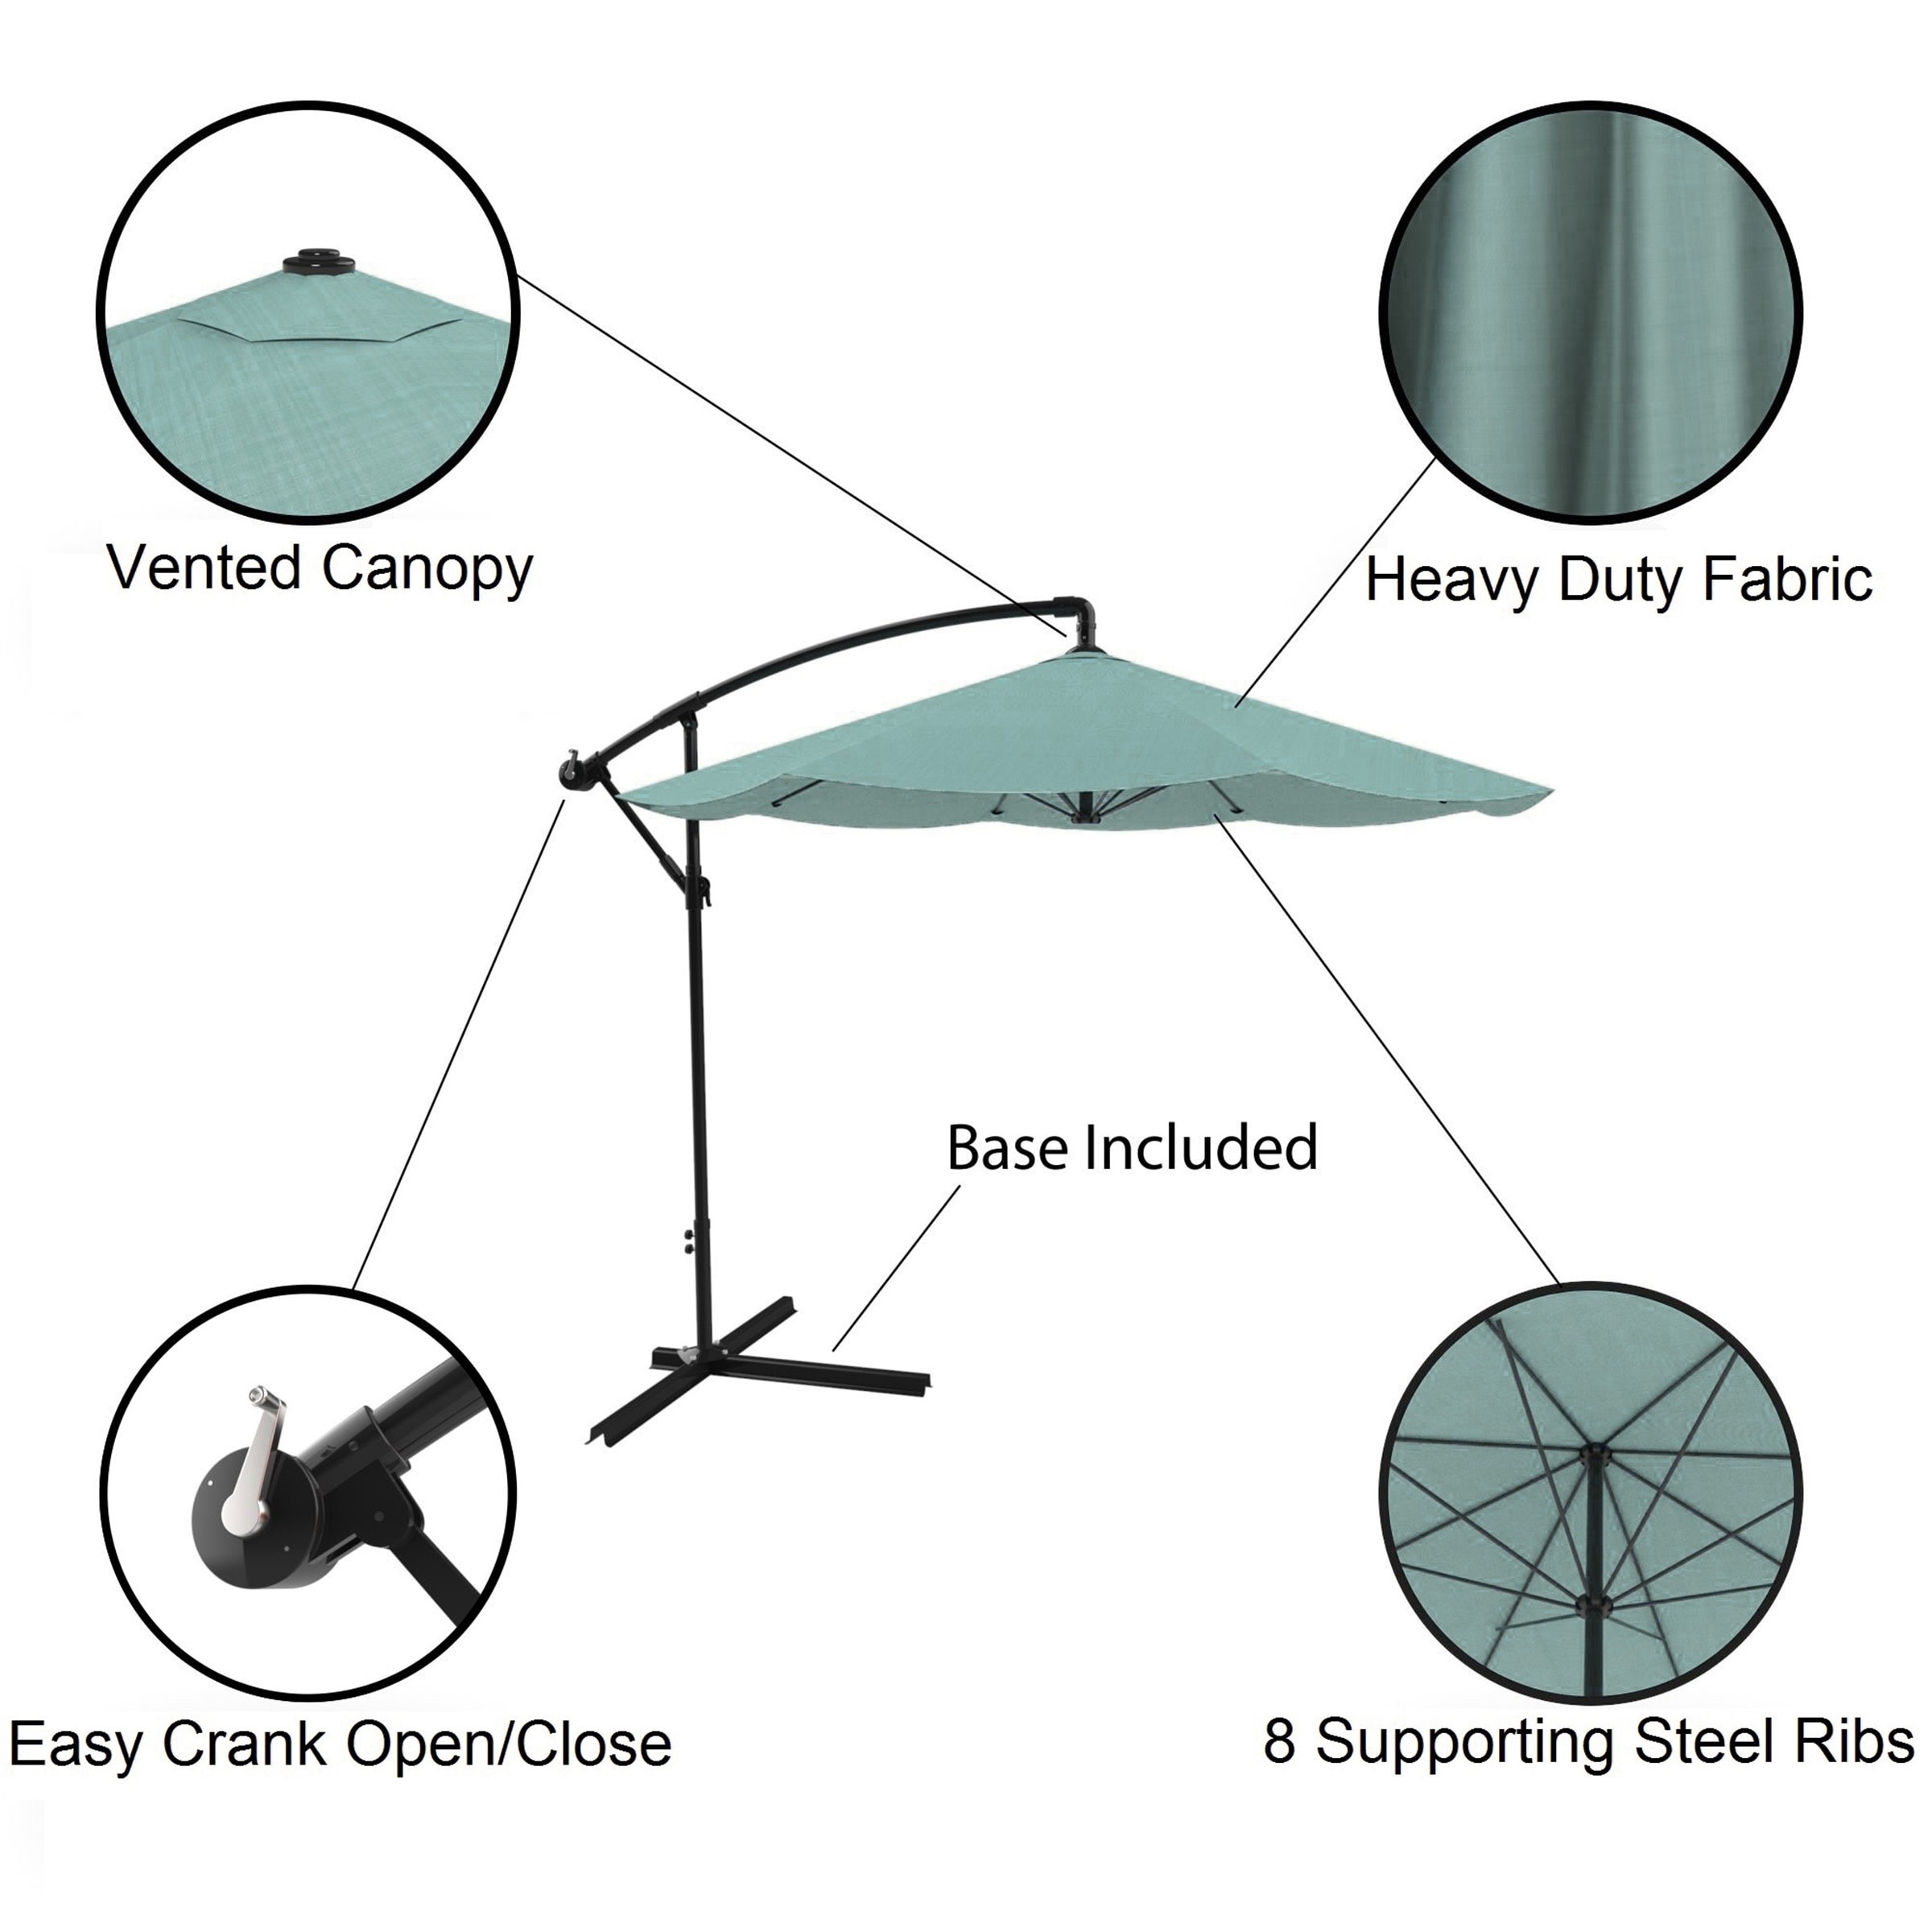 10ft Cantilever Easy Crank Umbrella by Pure Garden, Base Included